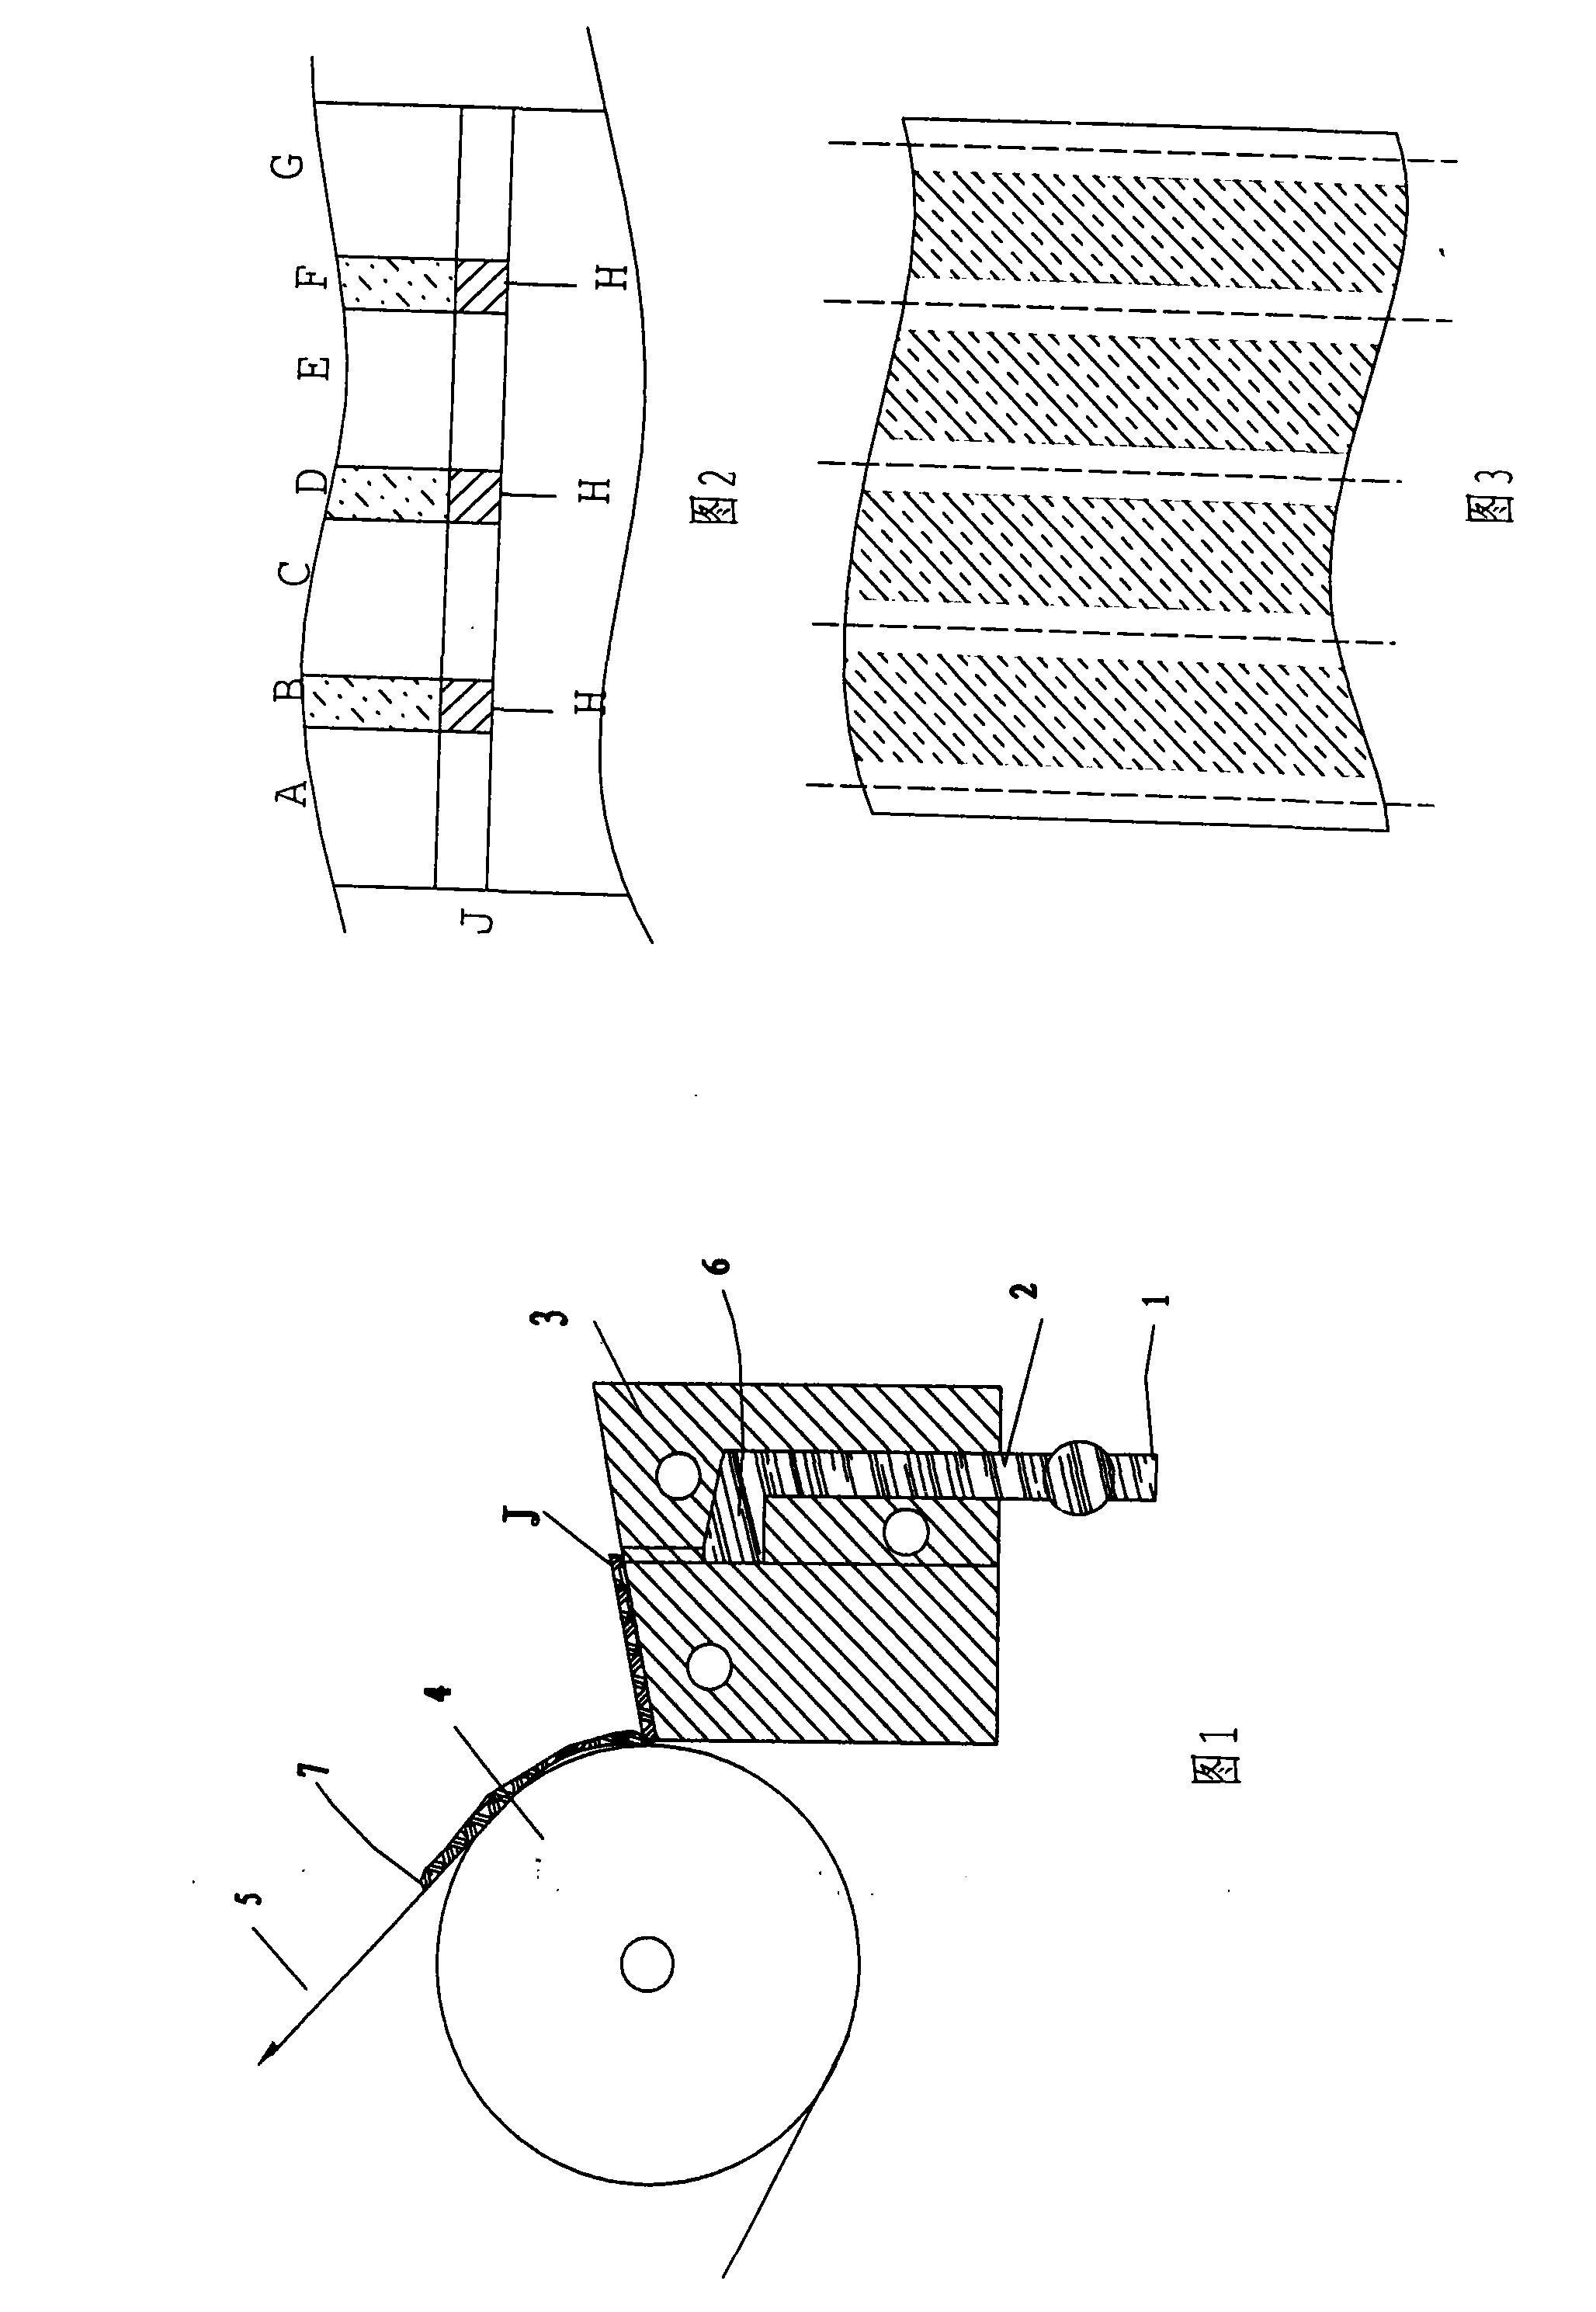 A pole piece coating method and coating nozzle